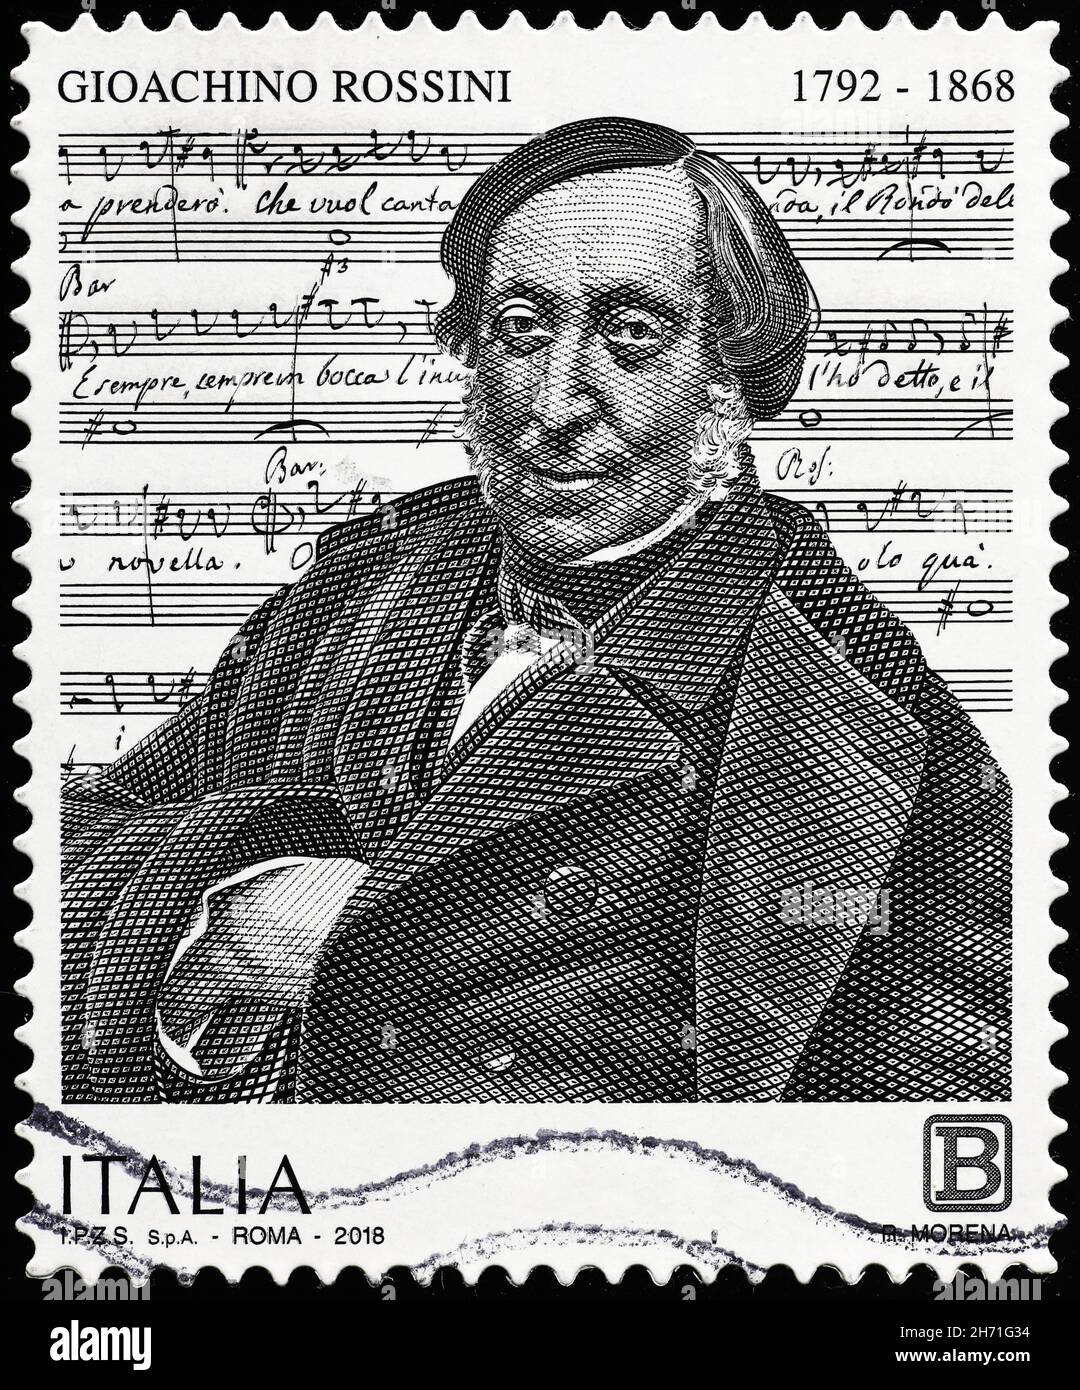 Gioacchino Rossini auf italienischer Briefmarke Stockfoto